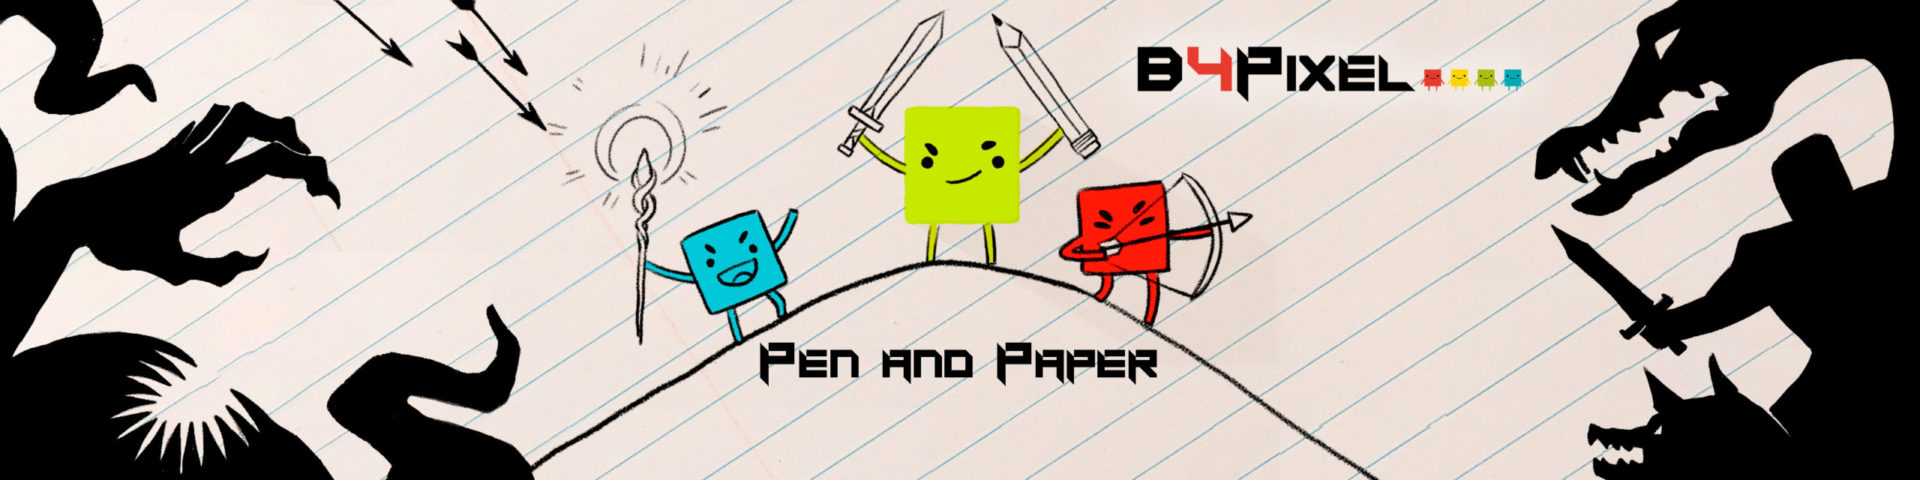 B4Pixel Patreon Header Banner scaled B4Pixel Pen and Paper Produktion Englisch